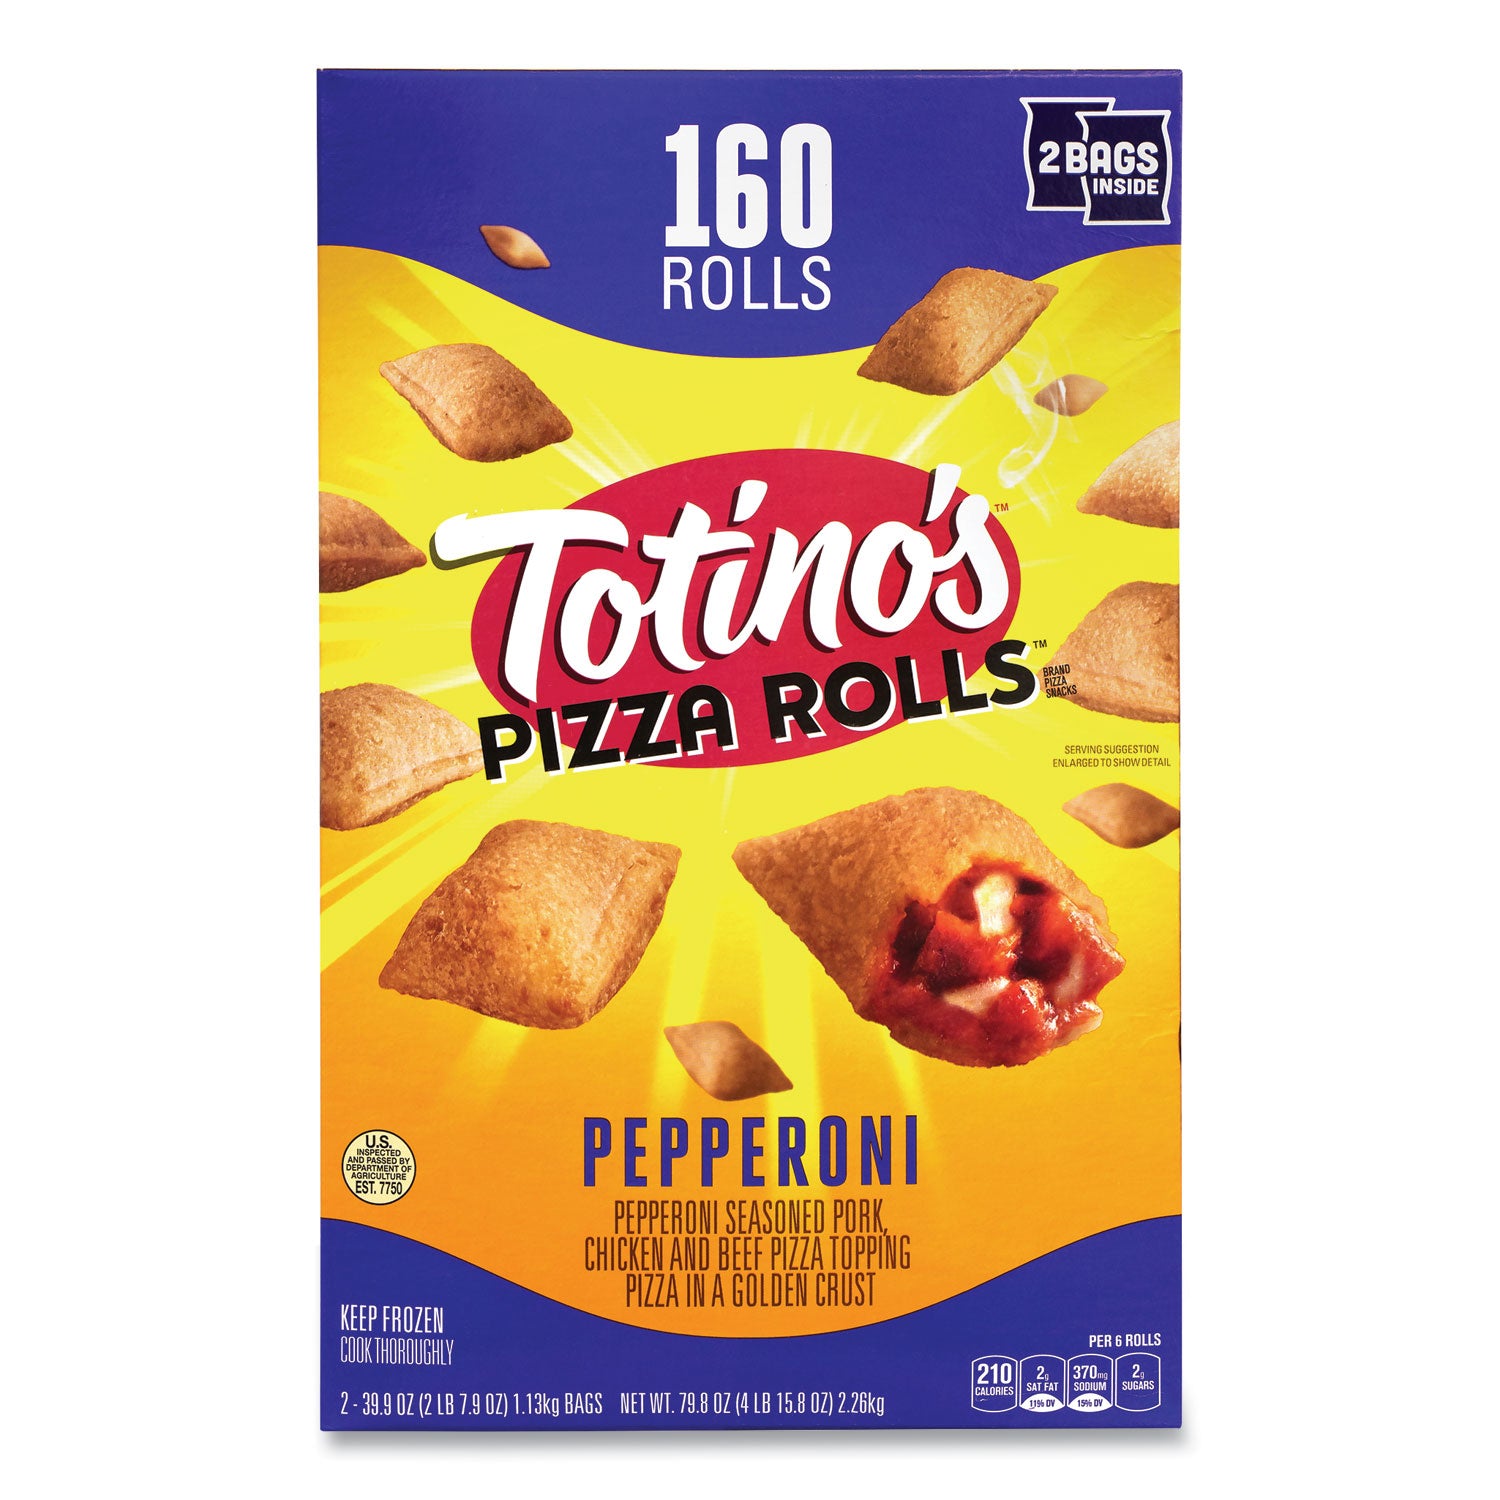 pepperoni-pizza-rolls-399-oz-bag-80-rolls-bag-2-bags-carton-ships-in-1-3-business-days_grr90300034 - 1